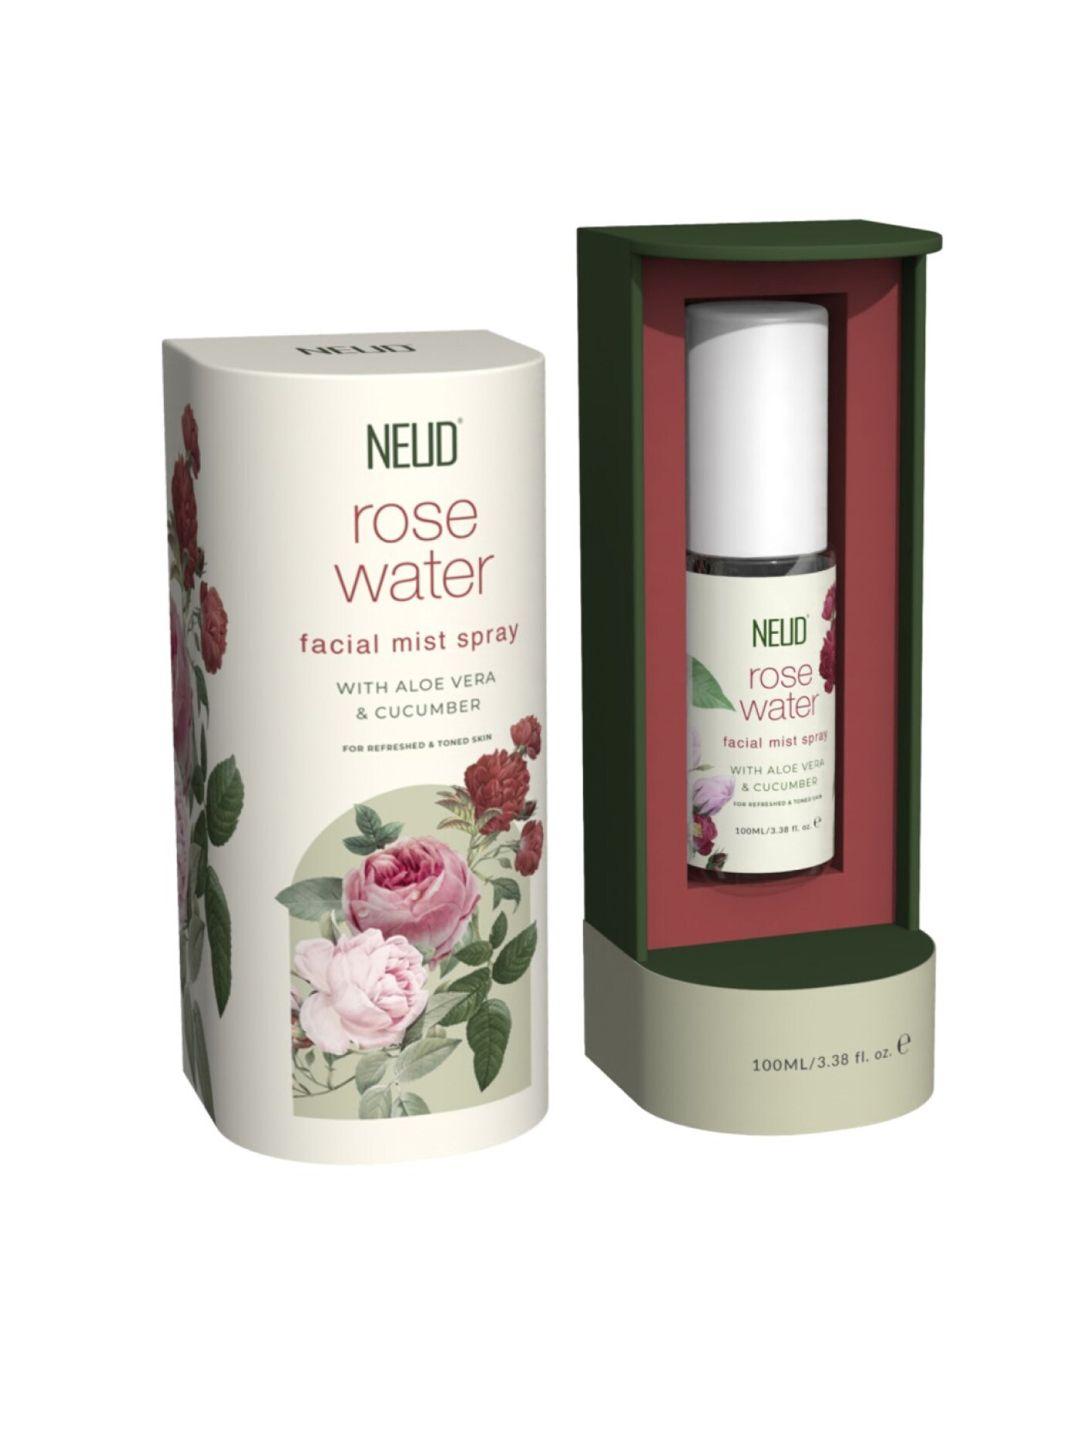 neud rose water facial mist spray with aloevera & cucumber 100 ml